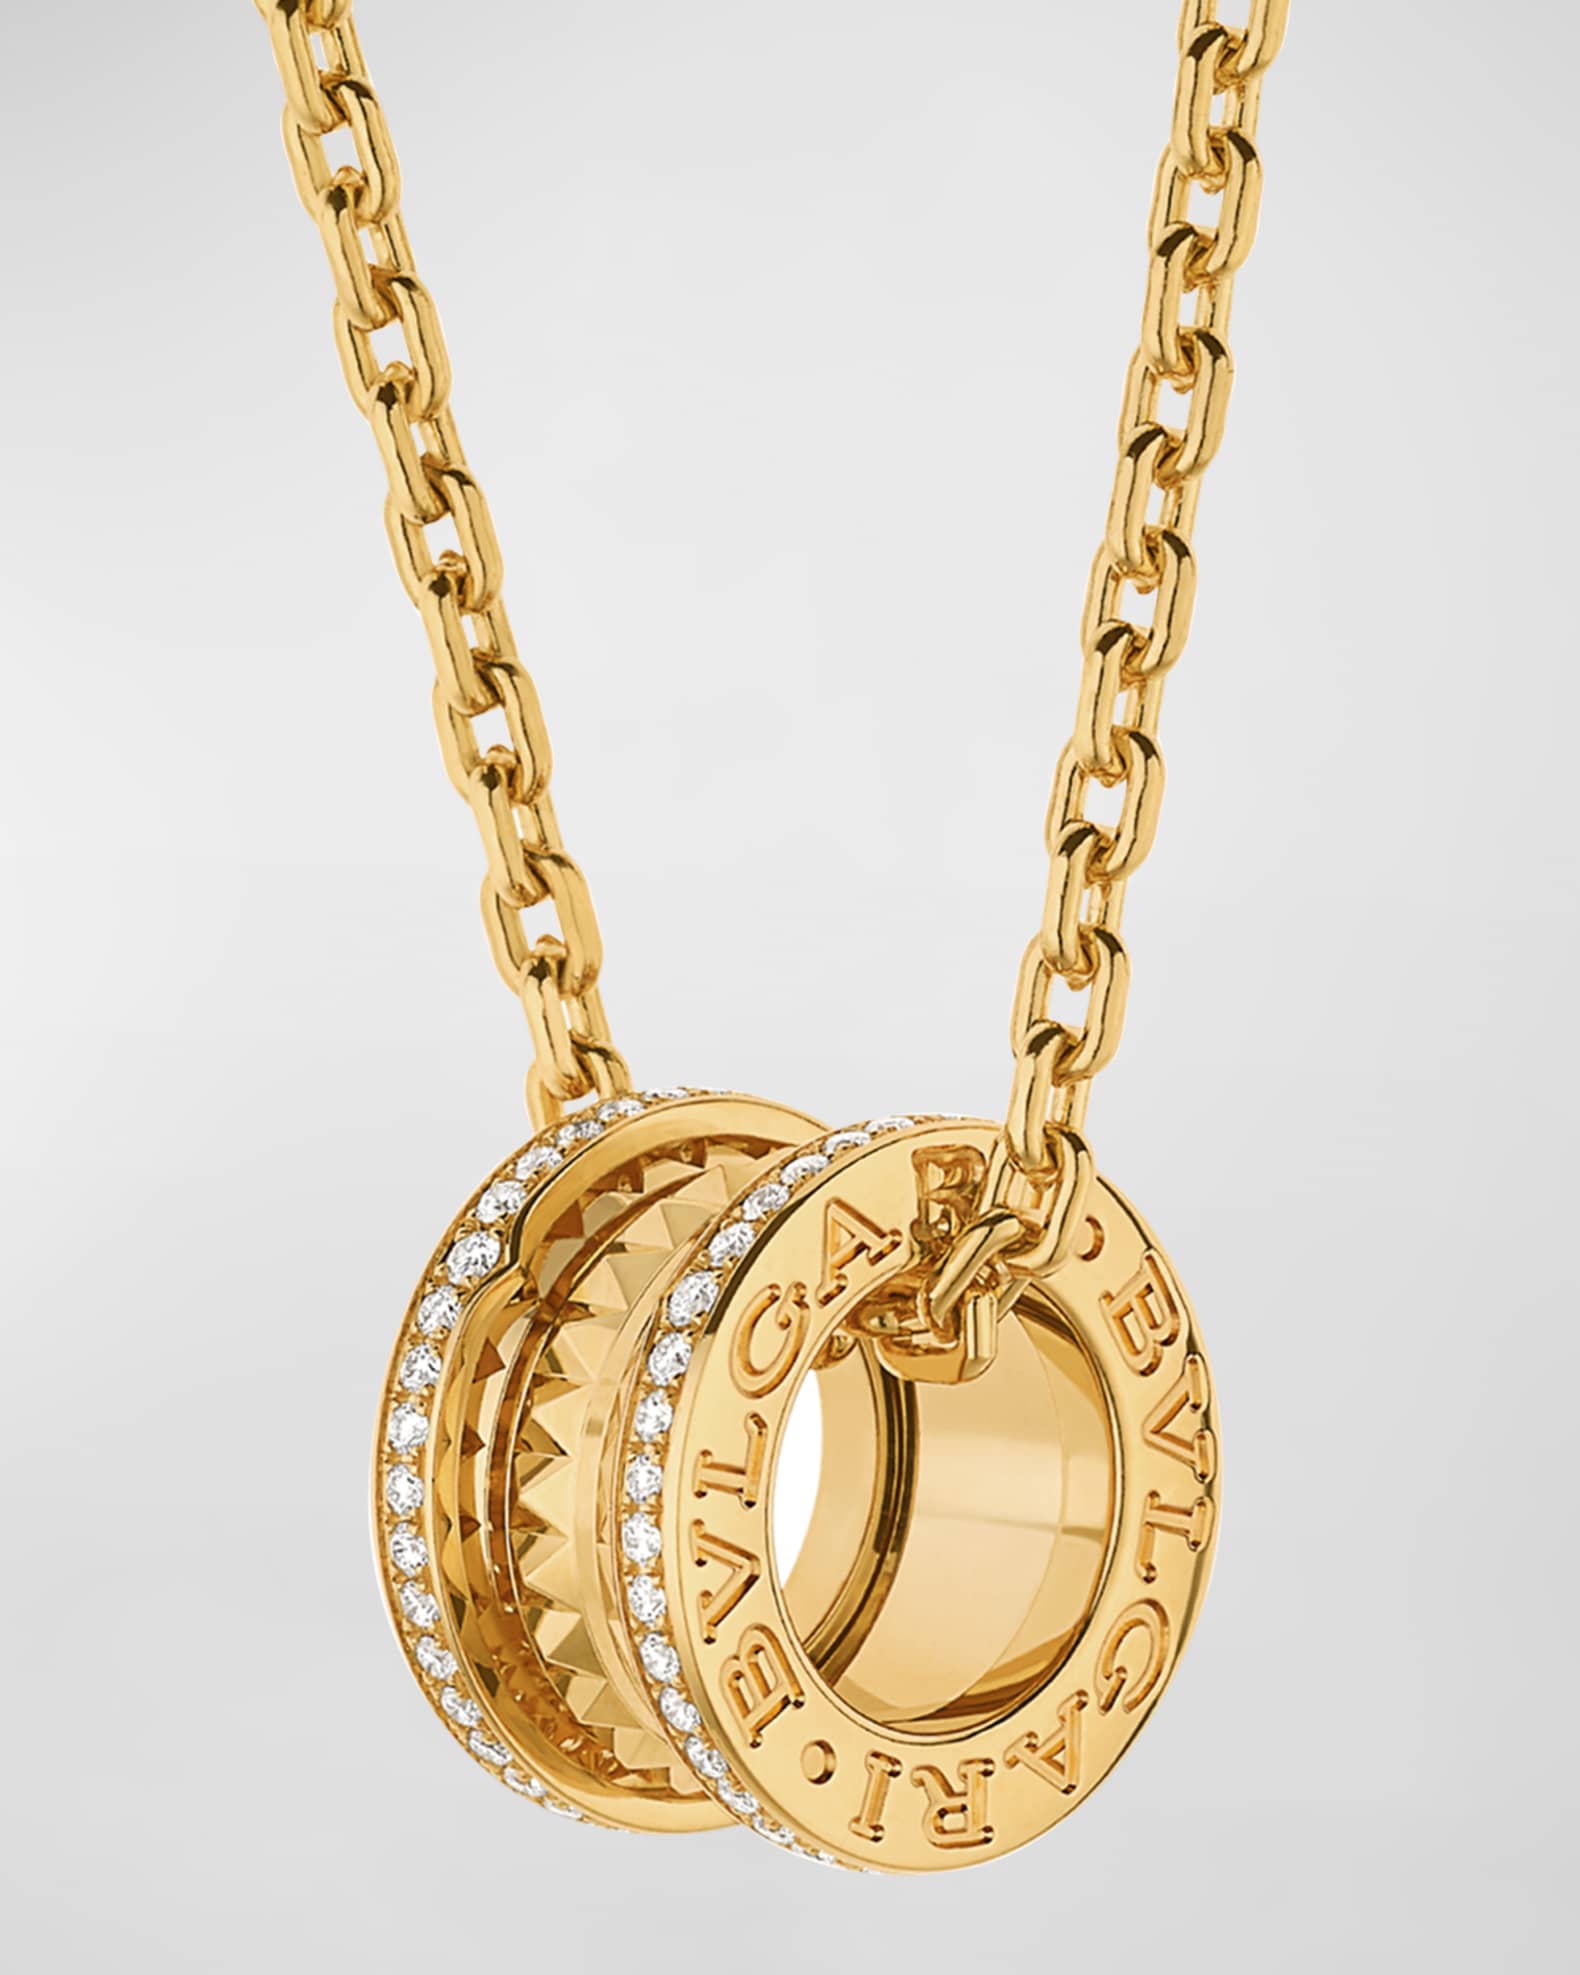 Rose gold B.zero1 Necklace with 0.38 ct Diamonds